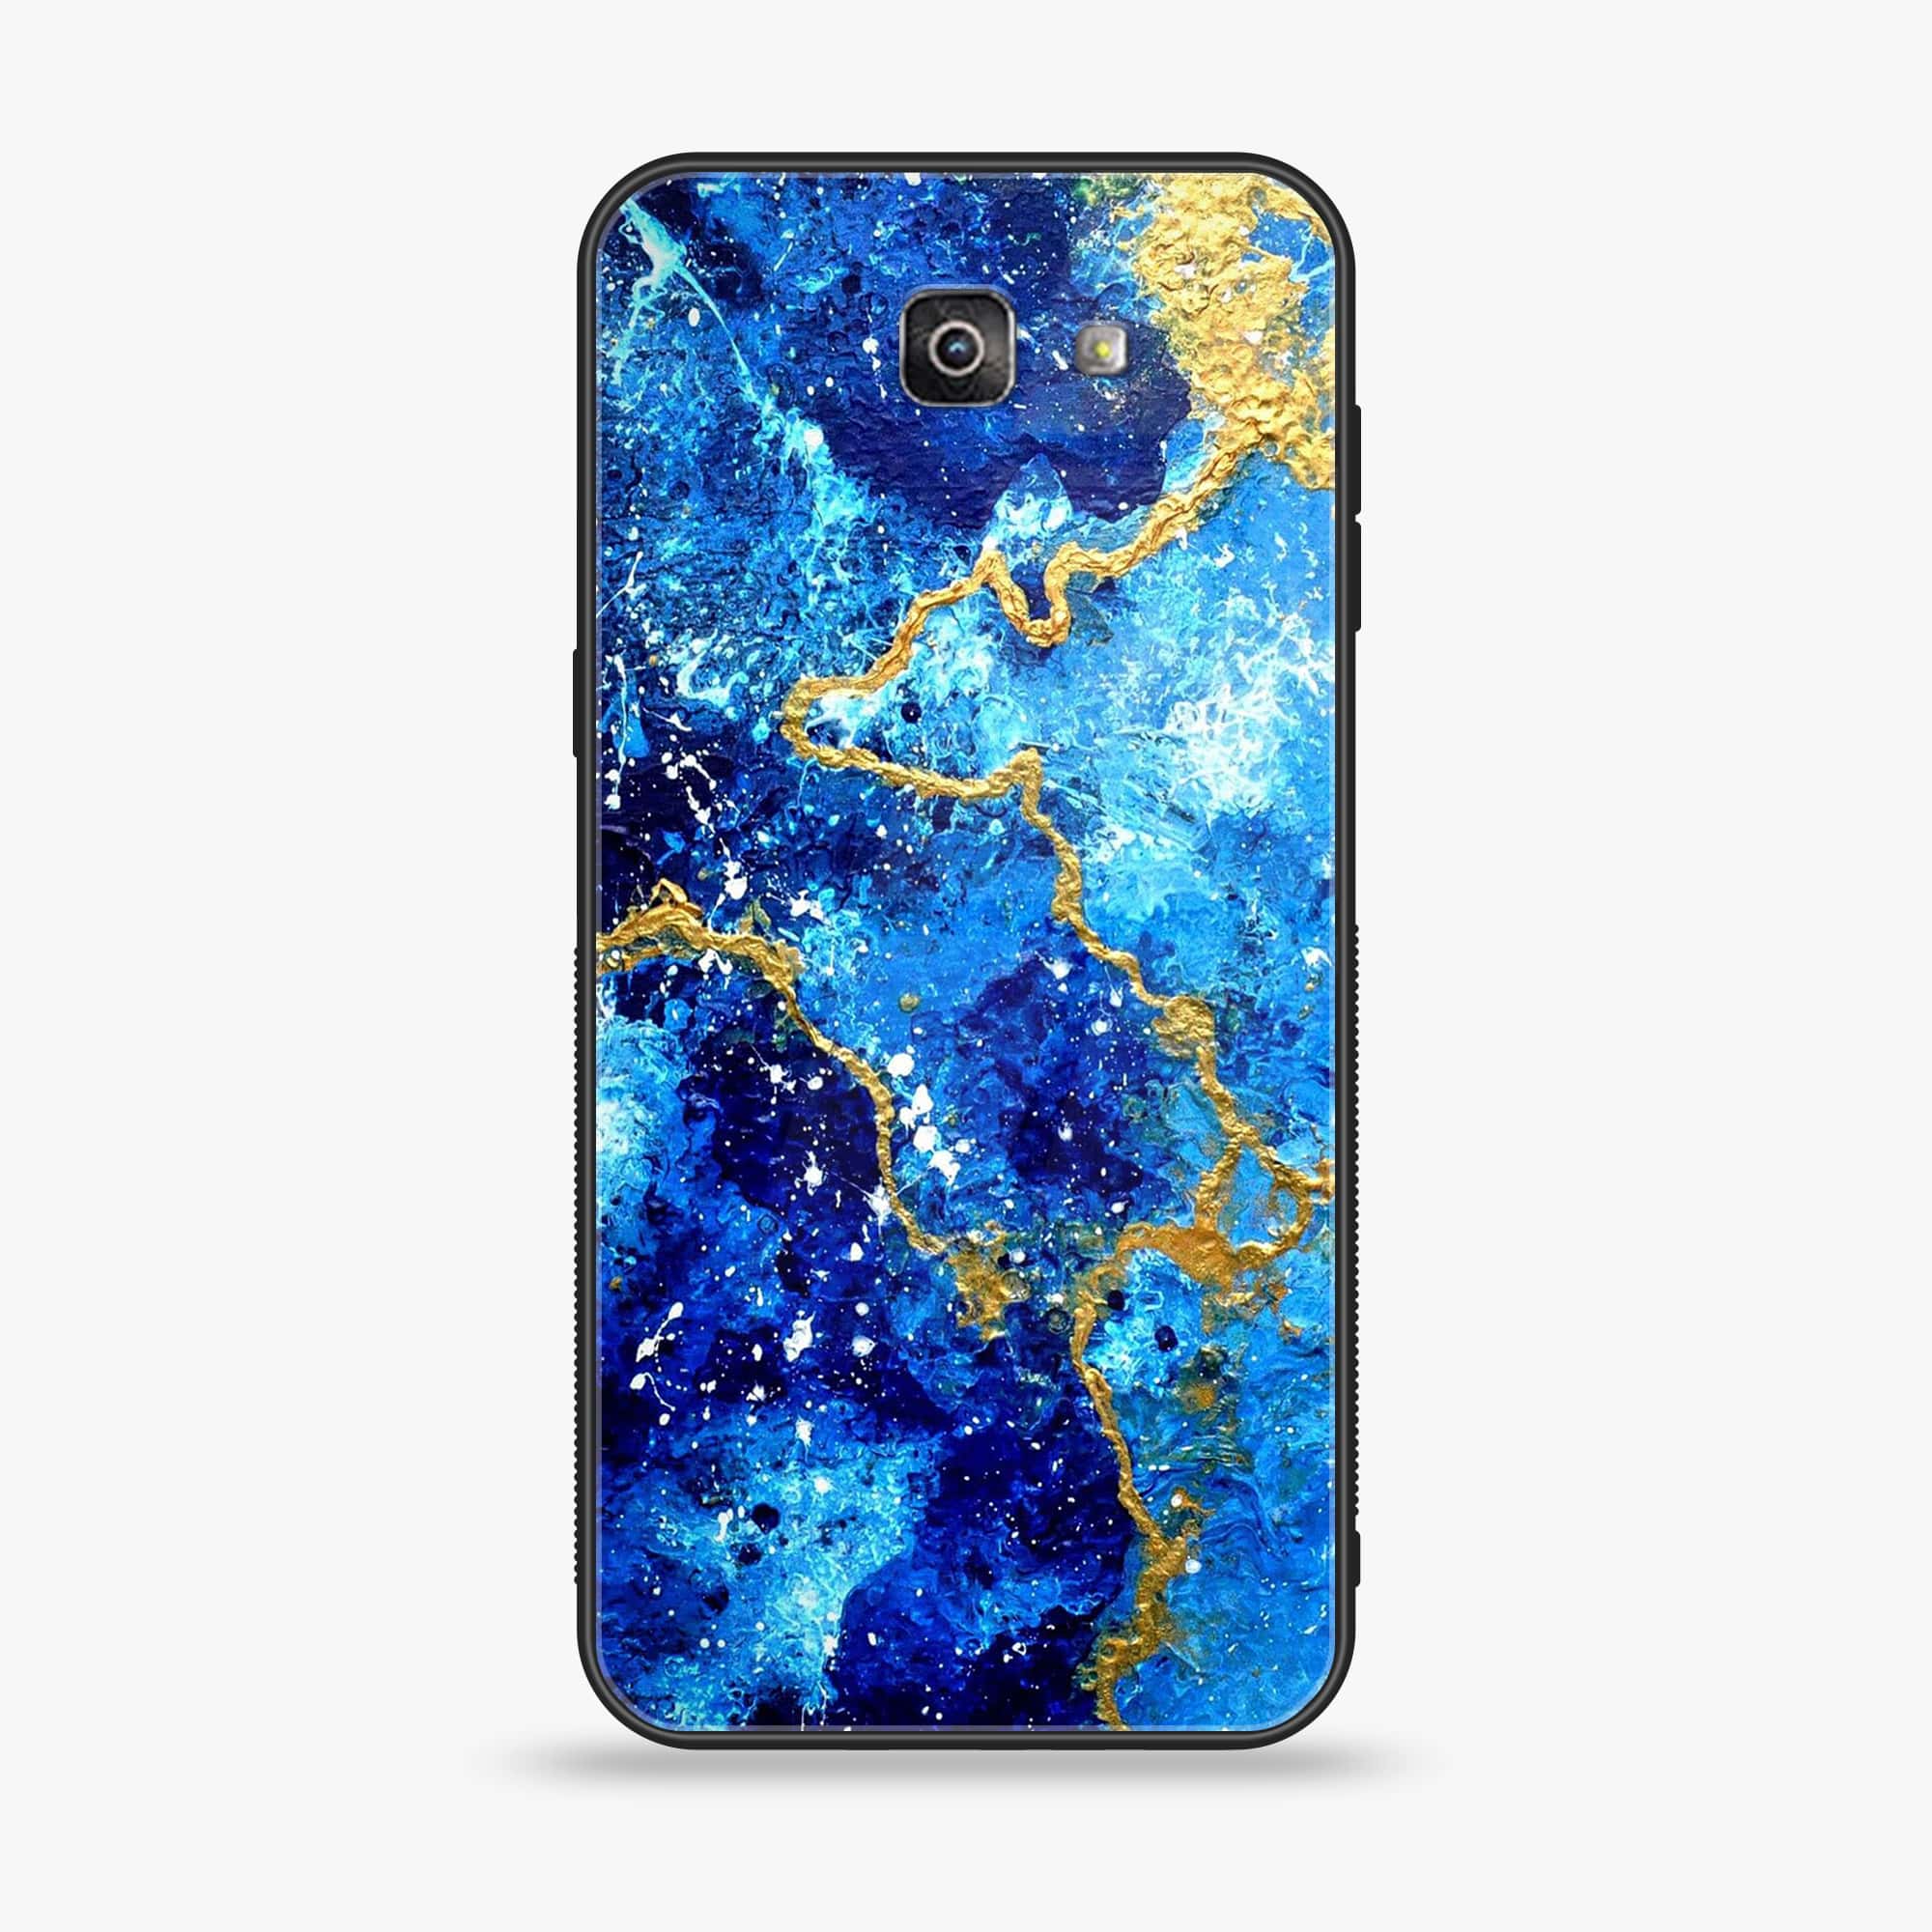 Galaxy J7 Prime 2018 - Blue Marble 2.0 Series - Premium Printed Glass soft Bumper shock Proof Case